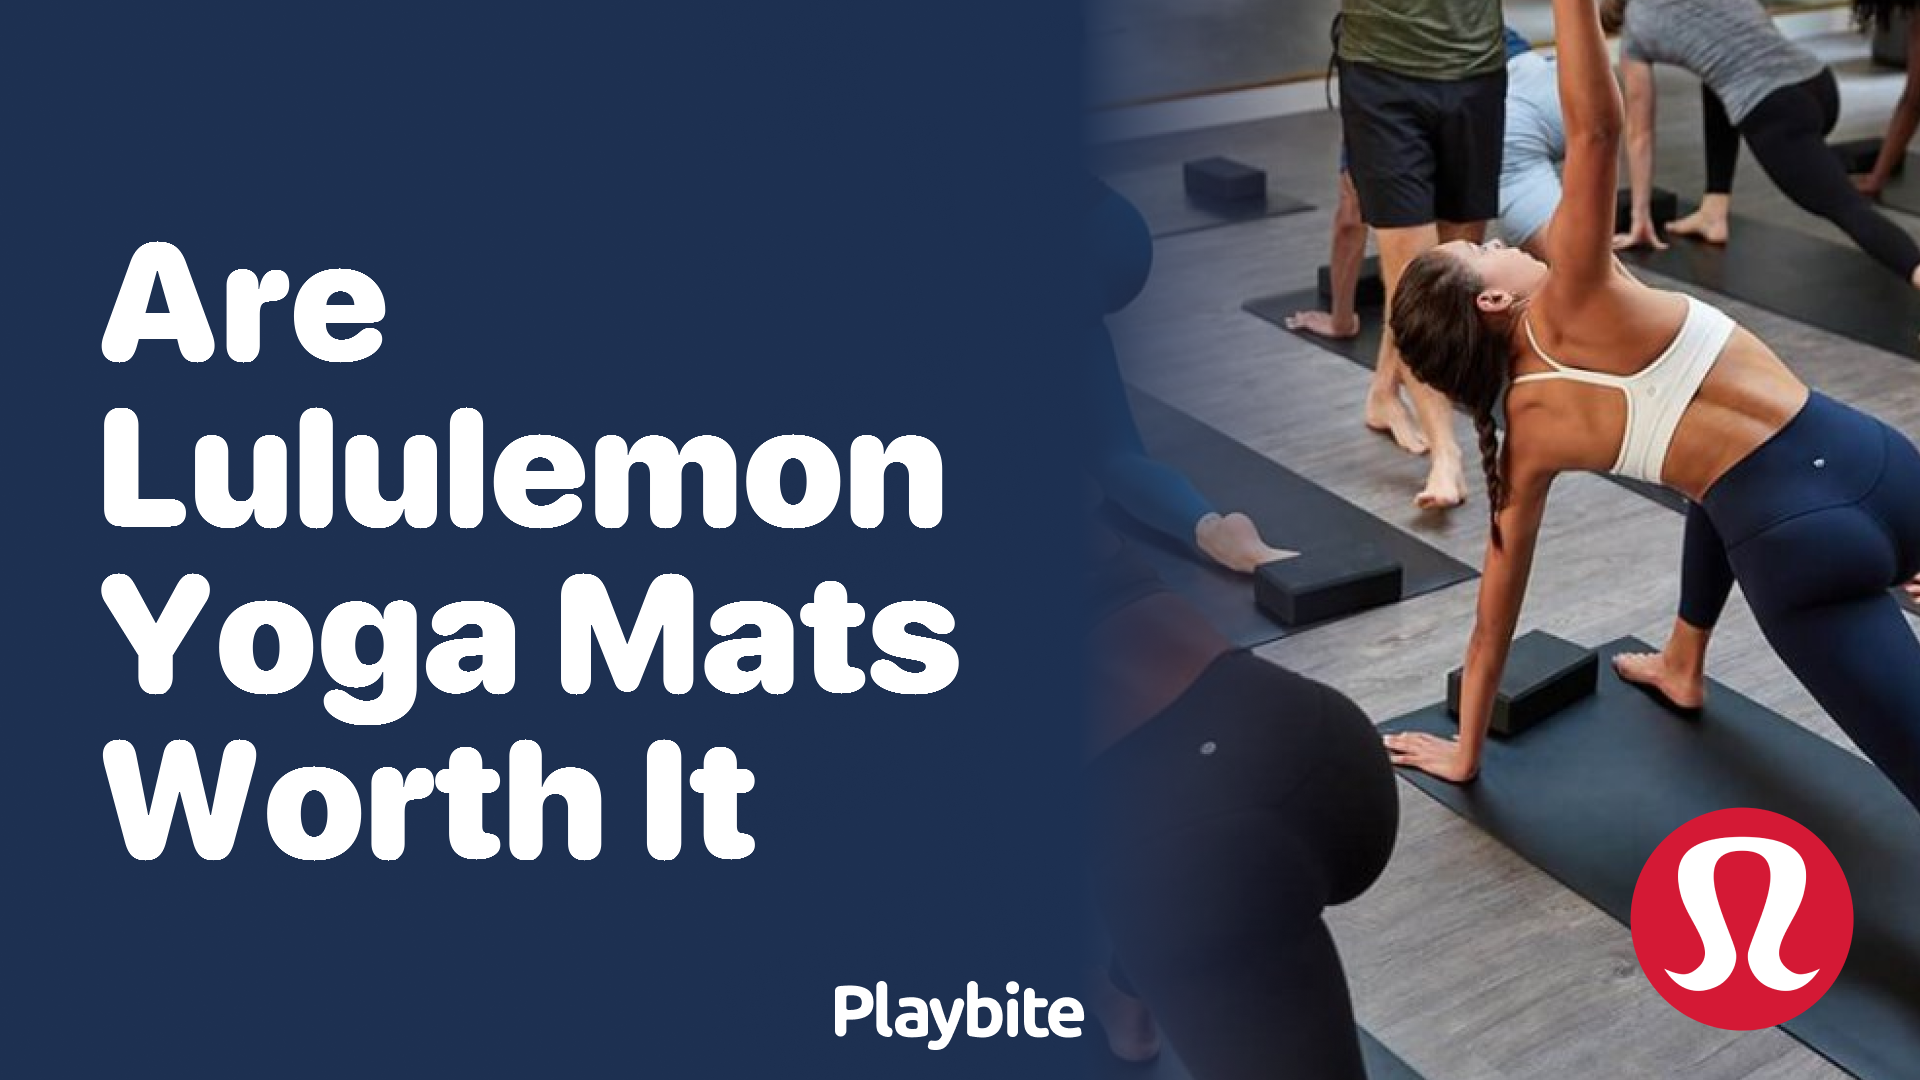 Are Lululemon Yoga Mats Worth It? Exploring Their Value - Playbite